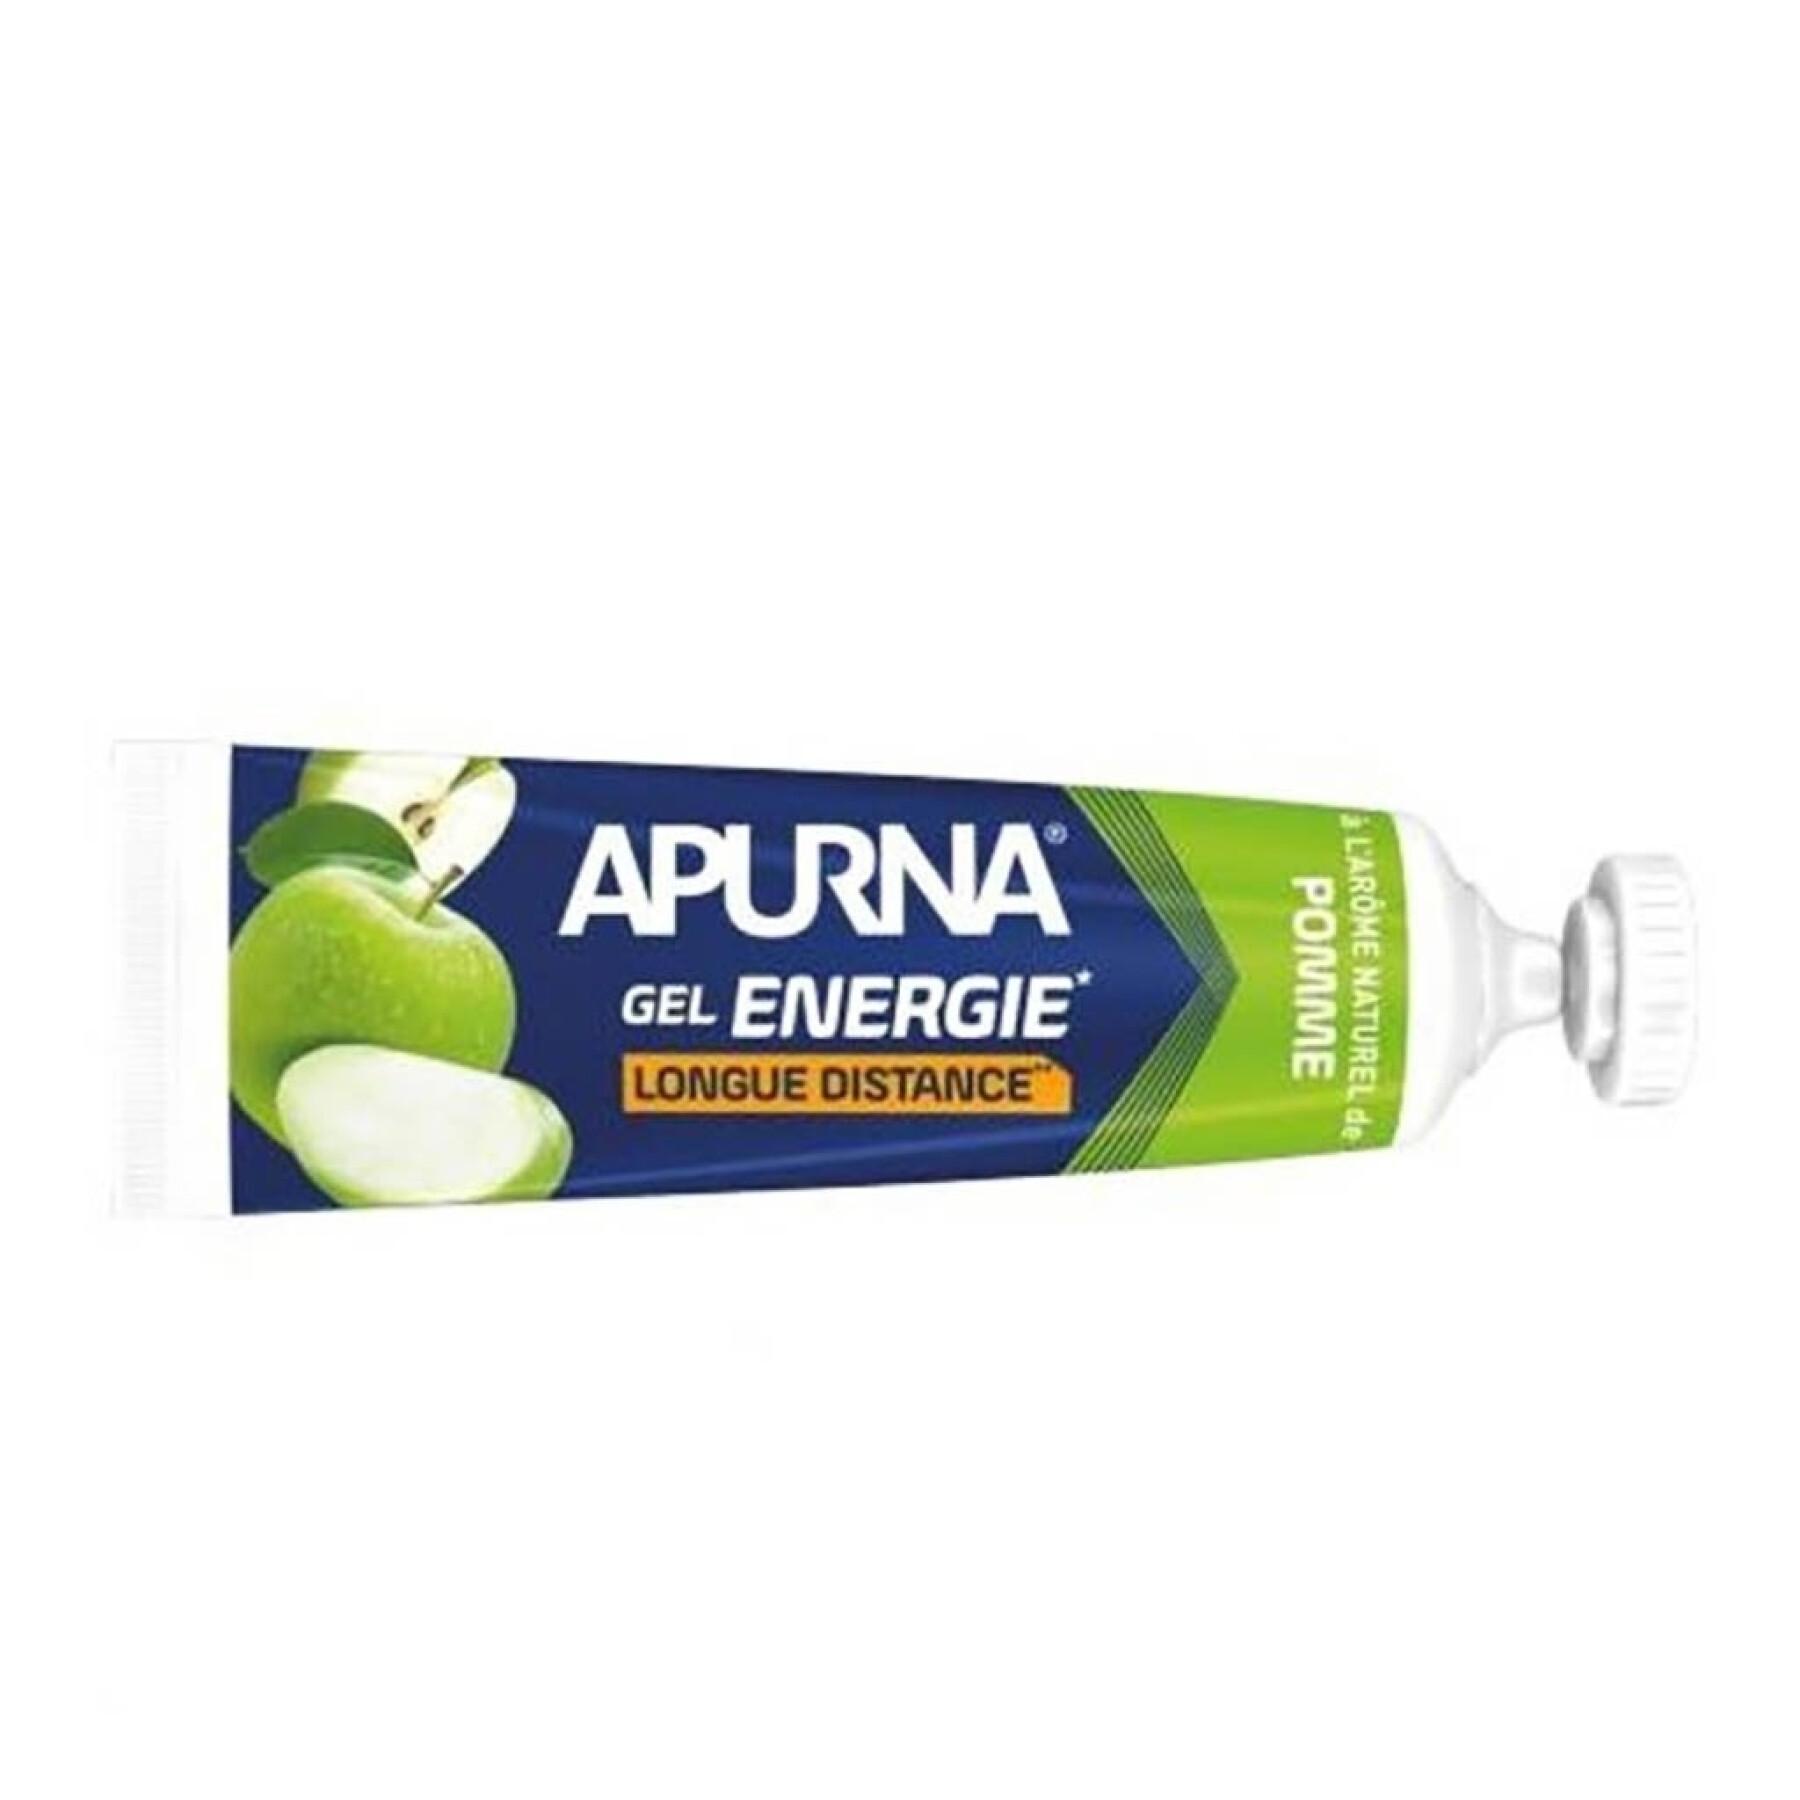 5 green apple long-distance energy gels +2h of effort, including 1 free gel Apurna